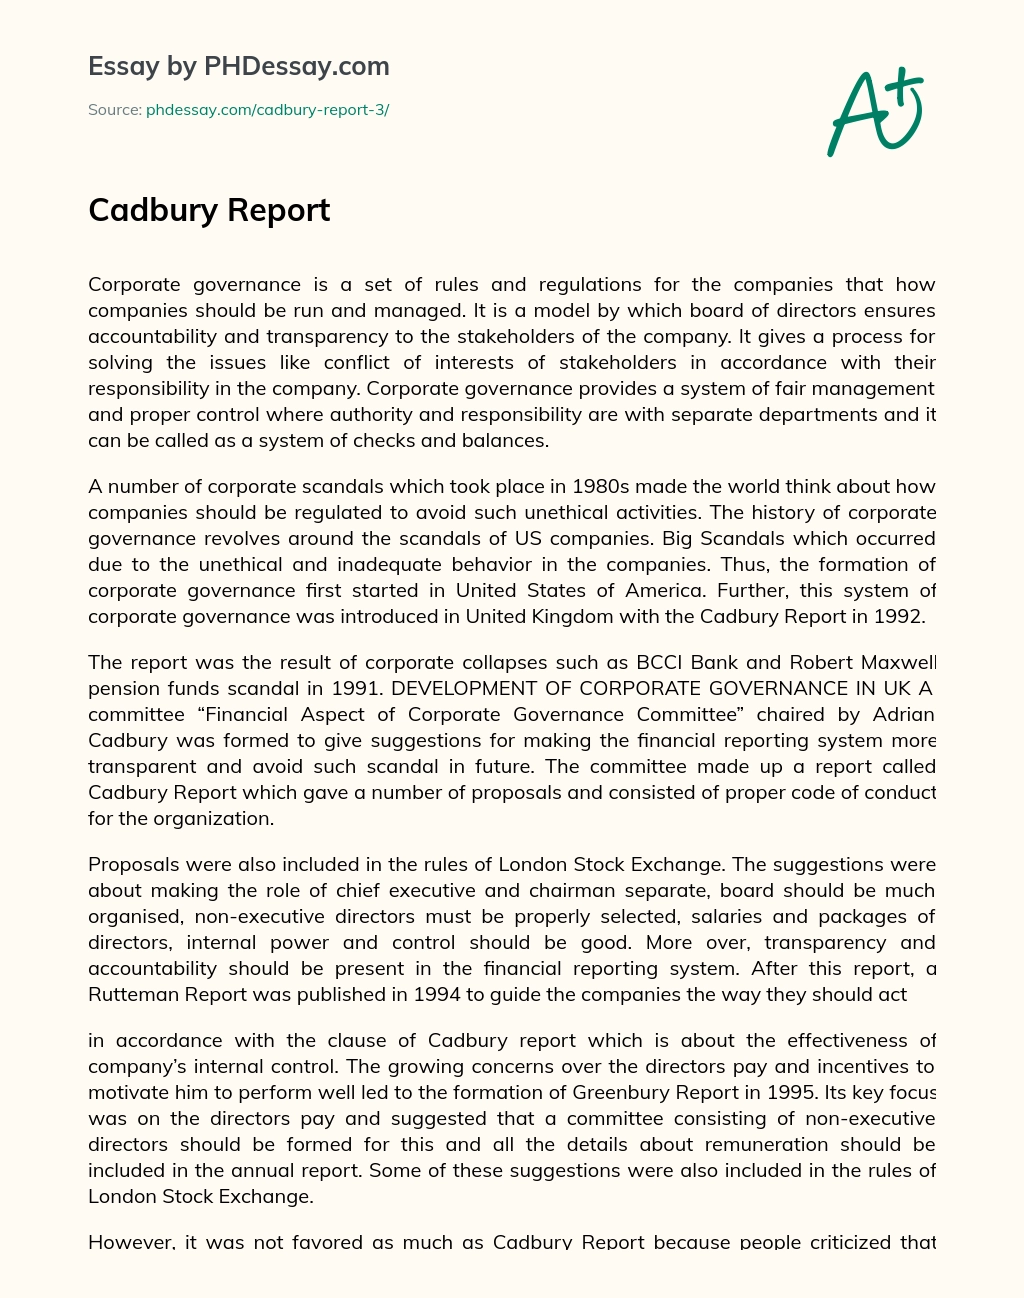 Cadbury Report essay